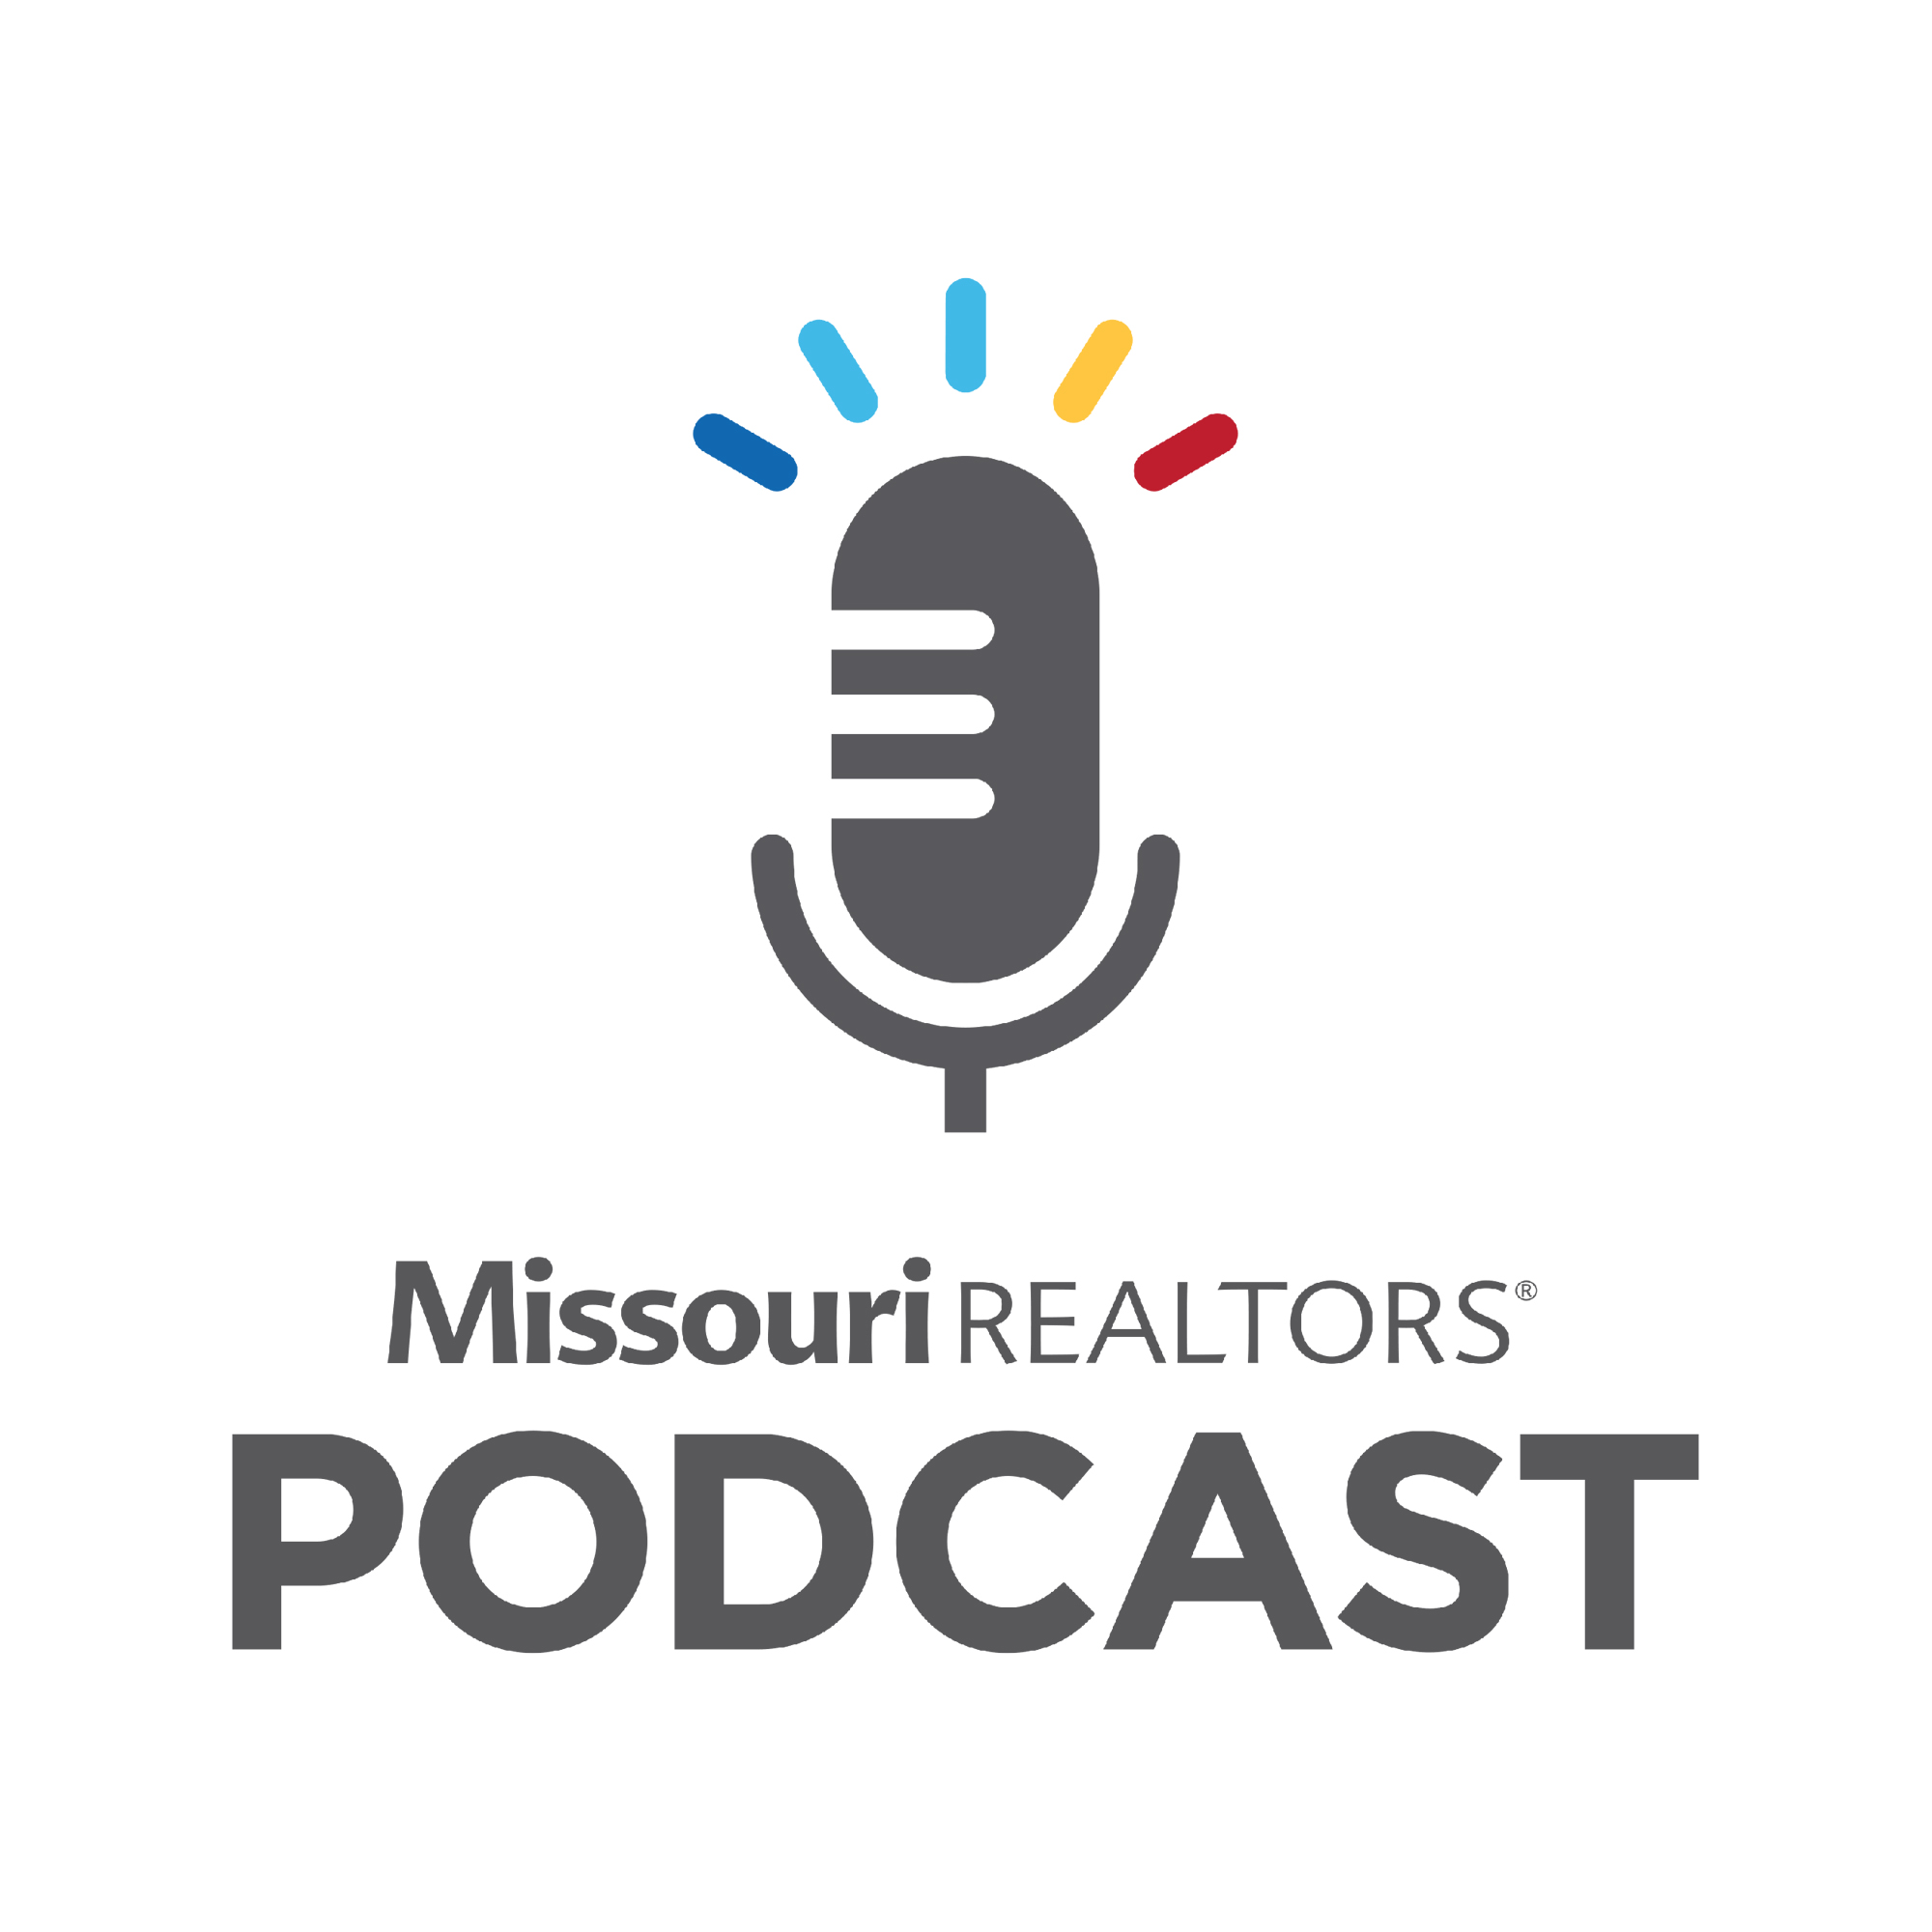 Missouri REALTORS® Podcast